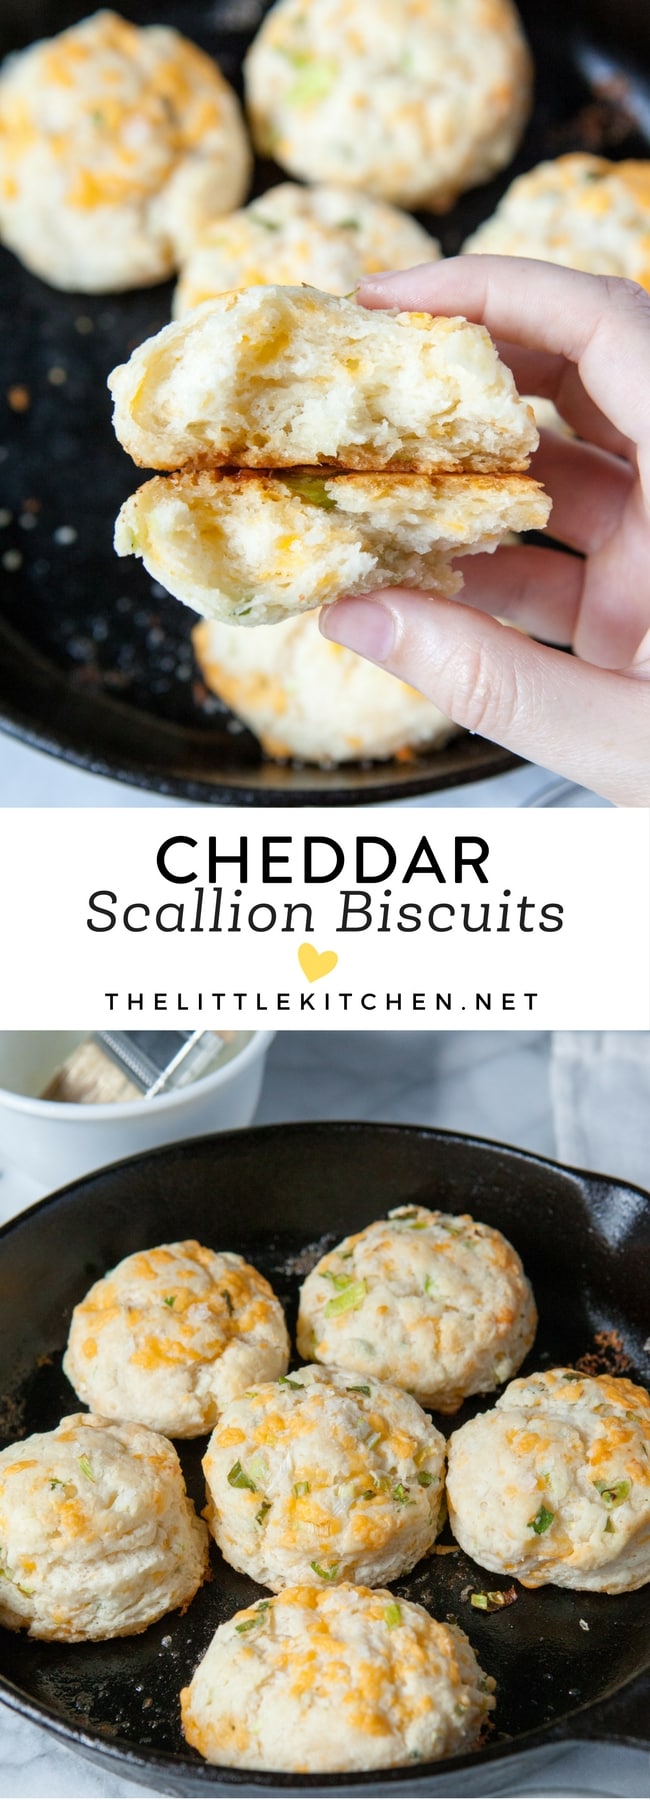 Cheddar Scallion Biscuits from thelittlekitchen.net